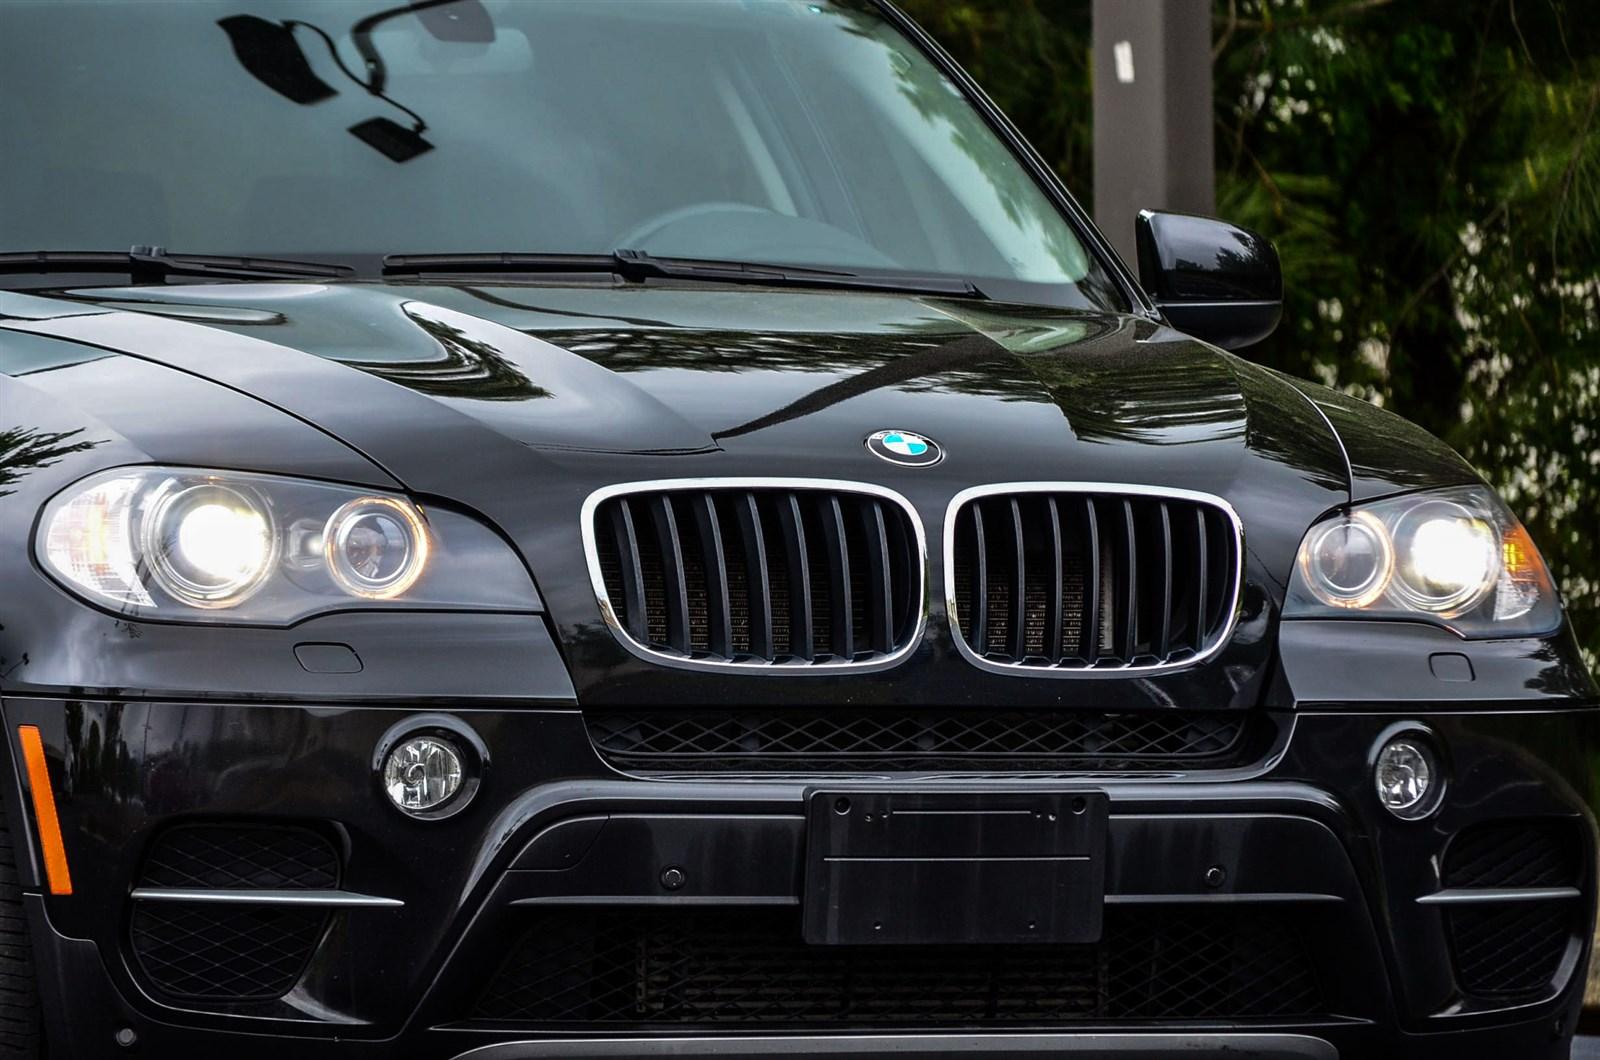 Used 2011 BMW X5 35i Premium for sale Sold at Gravity Autos Marietta in Marietta GA 30060 6